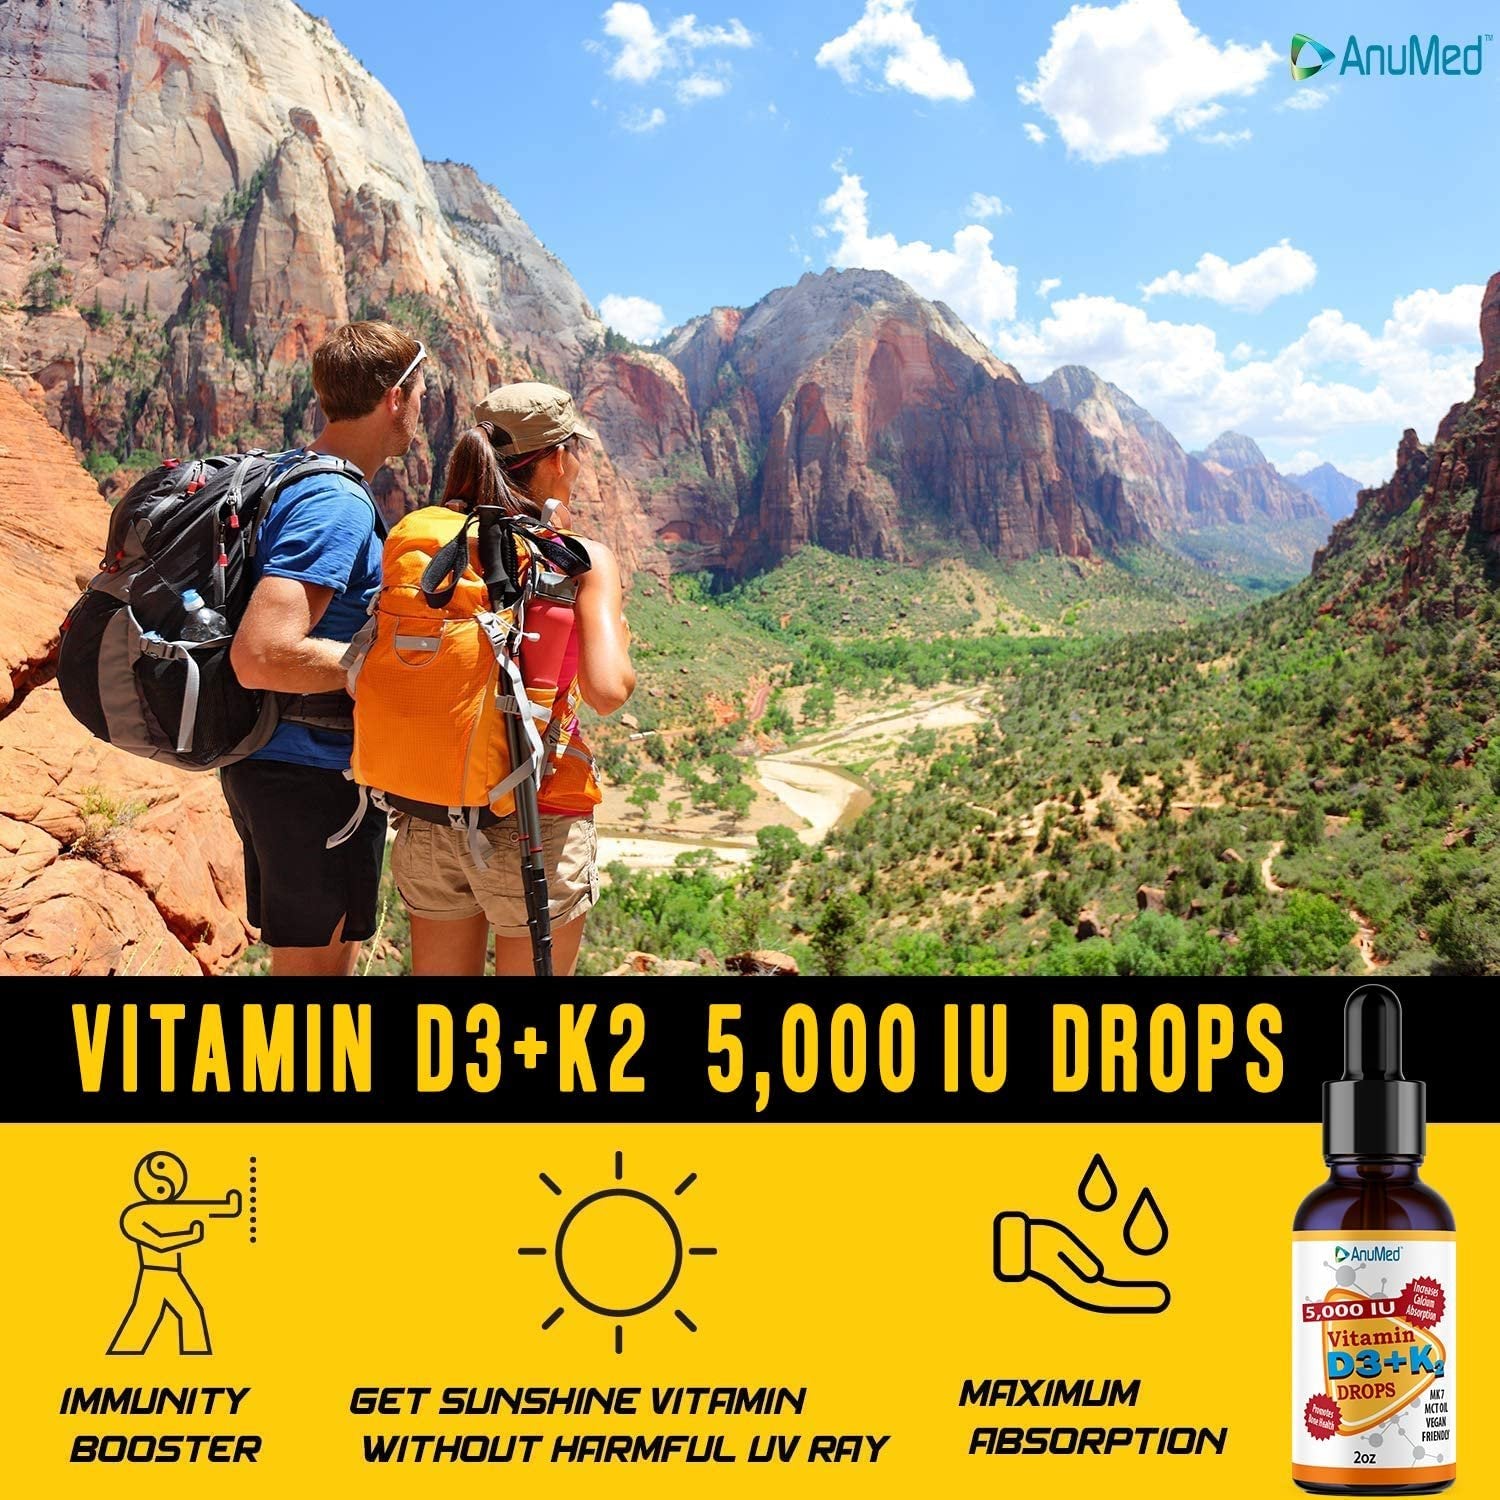 ANUMED Vitamin D3 + K2 5,000 IU Liquid Drops + Organic MCT Oil, Vitamin A (Retinol) 1250mcg, K2 (MK4,MK7). Promotes Heart, Bones, Immune System. 100% Vegan, Non-GMO, Gluten-Free, No Sugar Added (2oz)